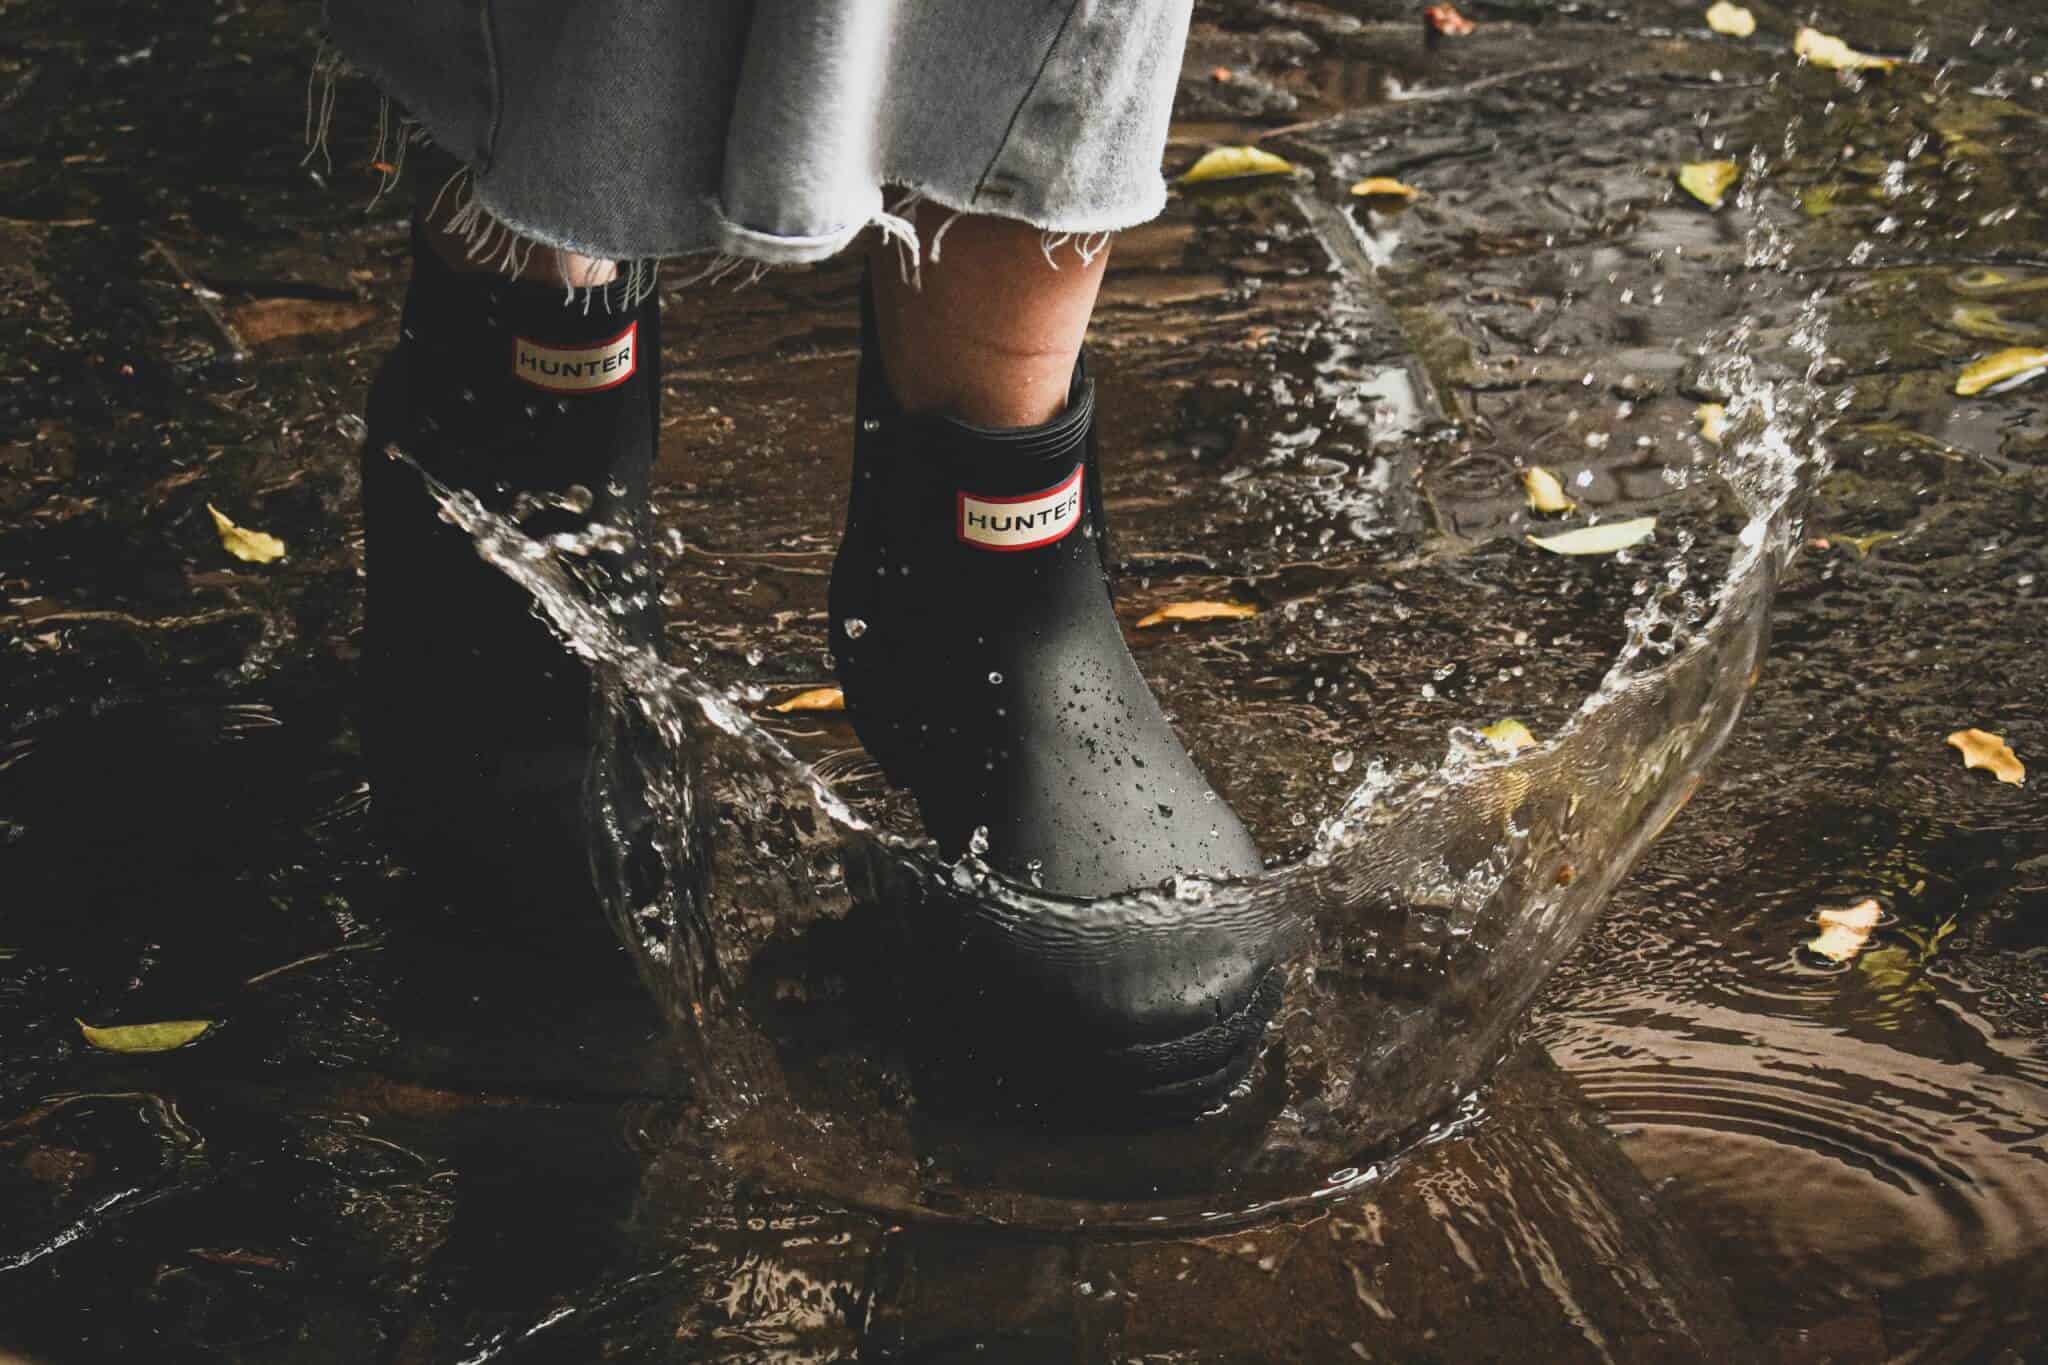 Wet Boots & Health